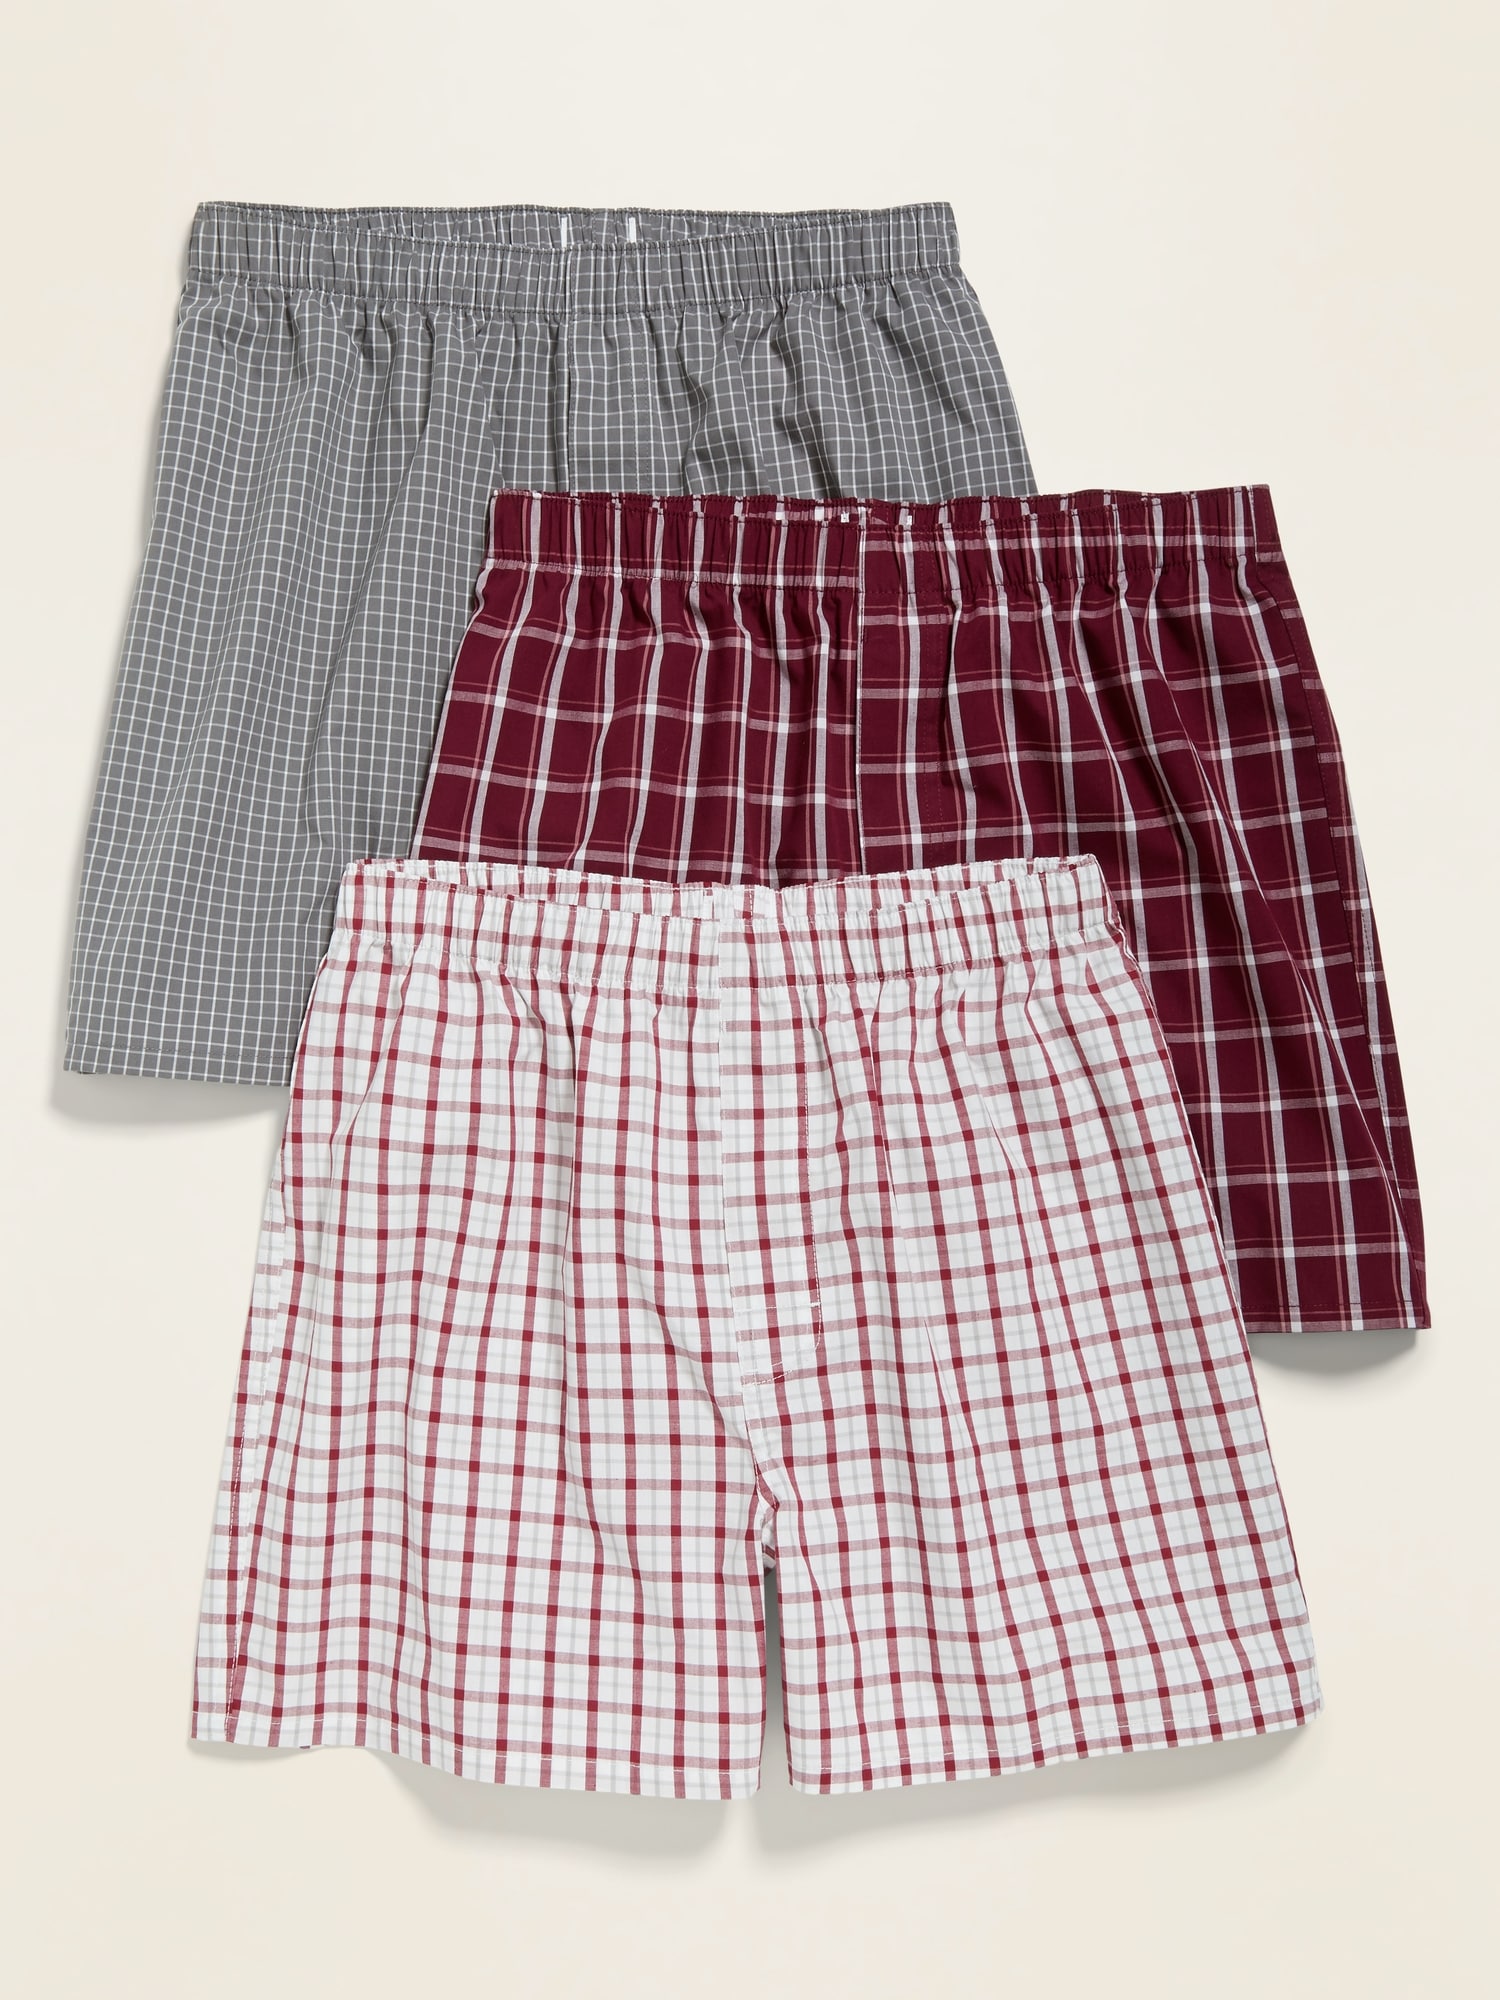 Patterned Poplin Boxer Shorts 3-Pack for Men -- 3.75-inch inseam | Old Navy